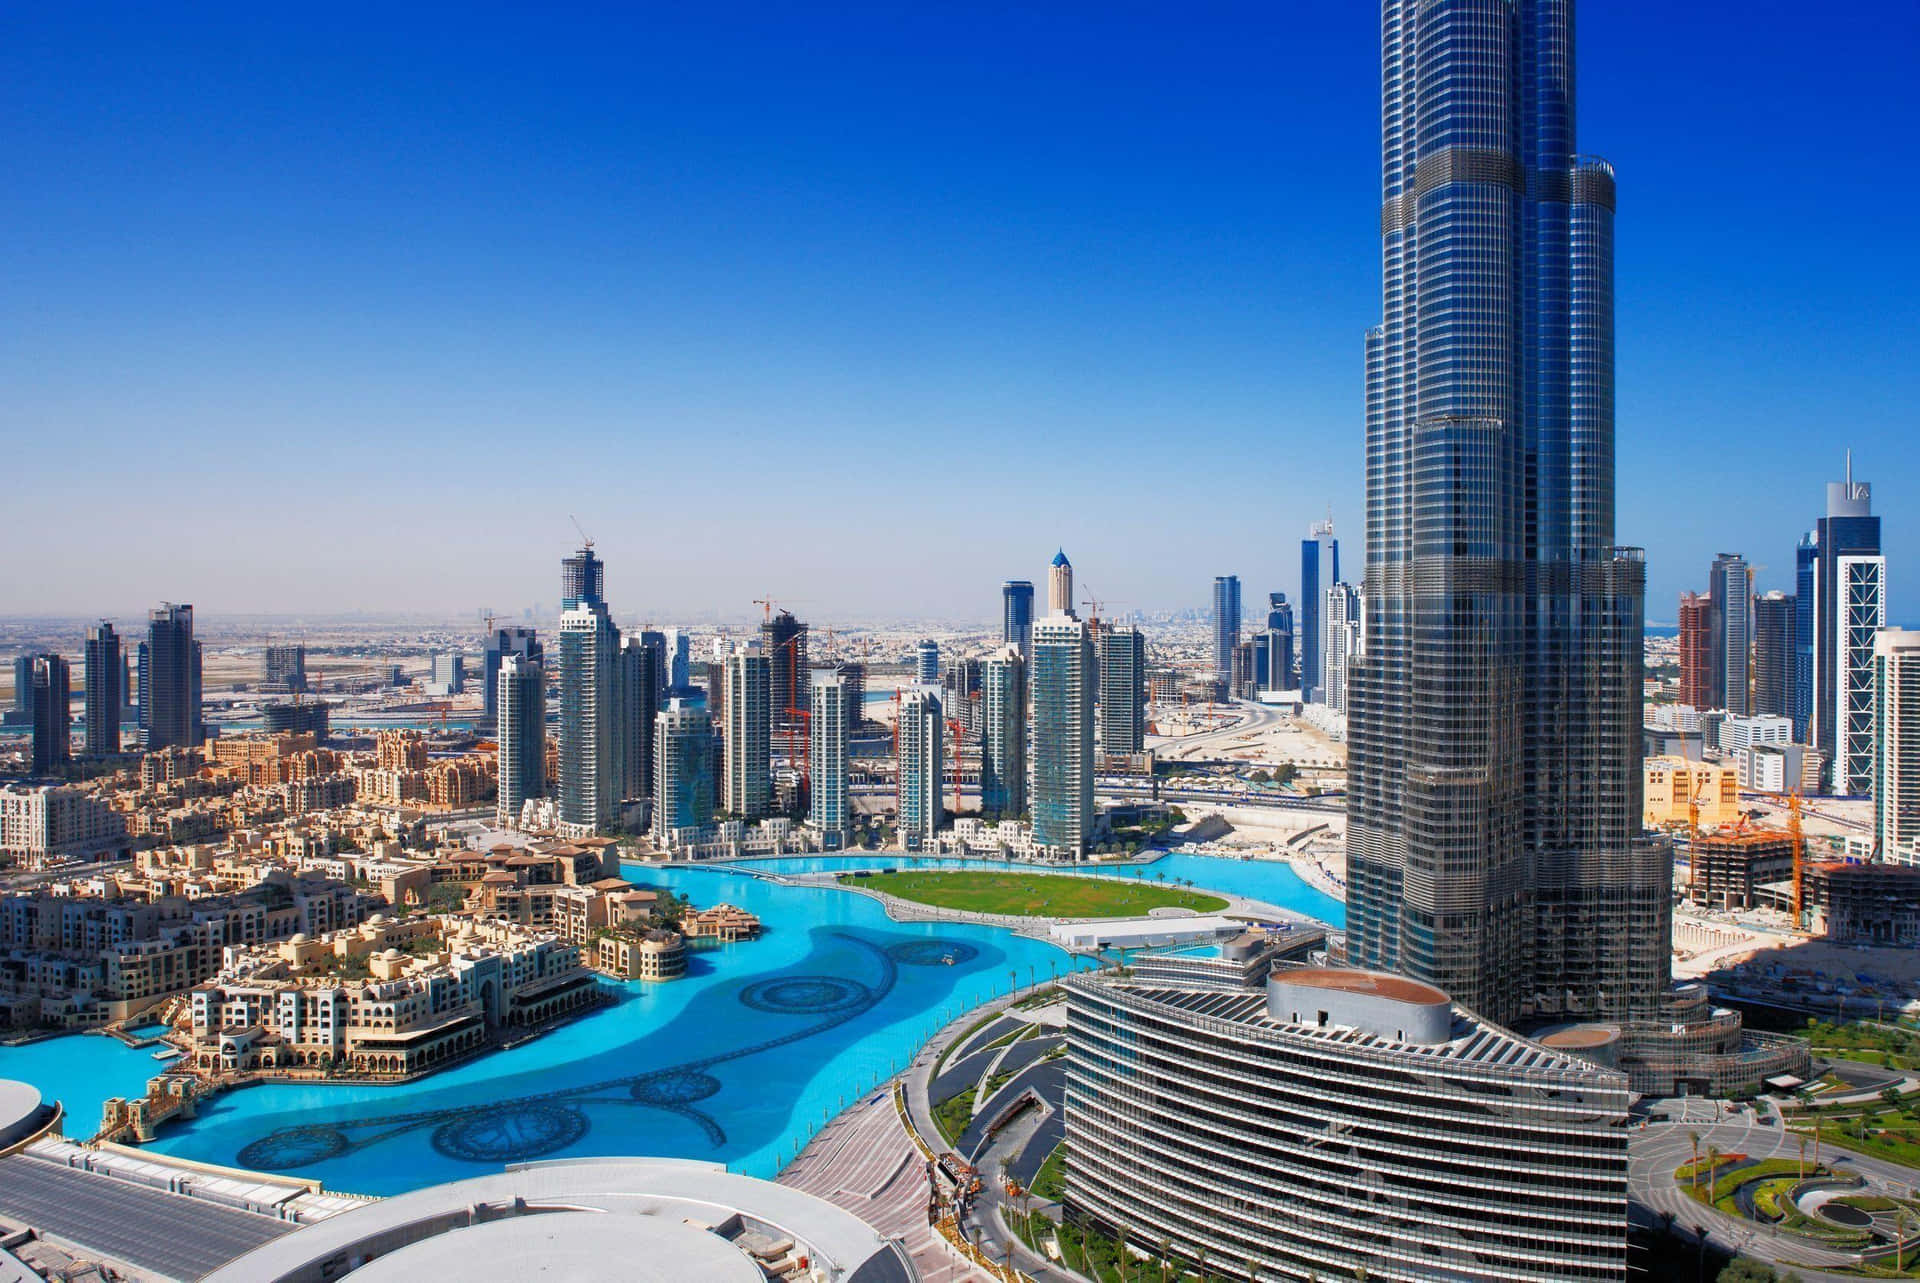 Breathtaking skyscrapers of Dubai